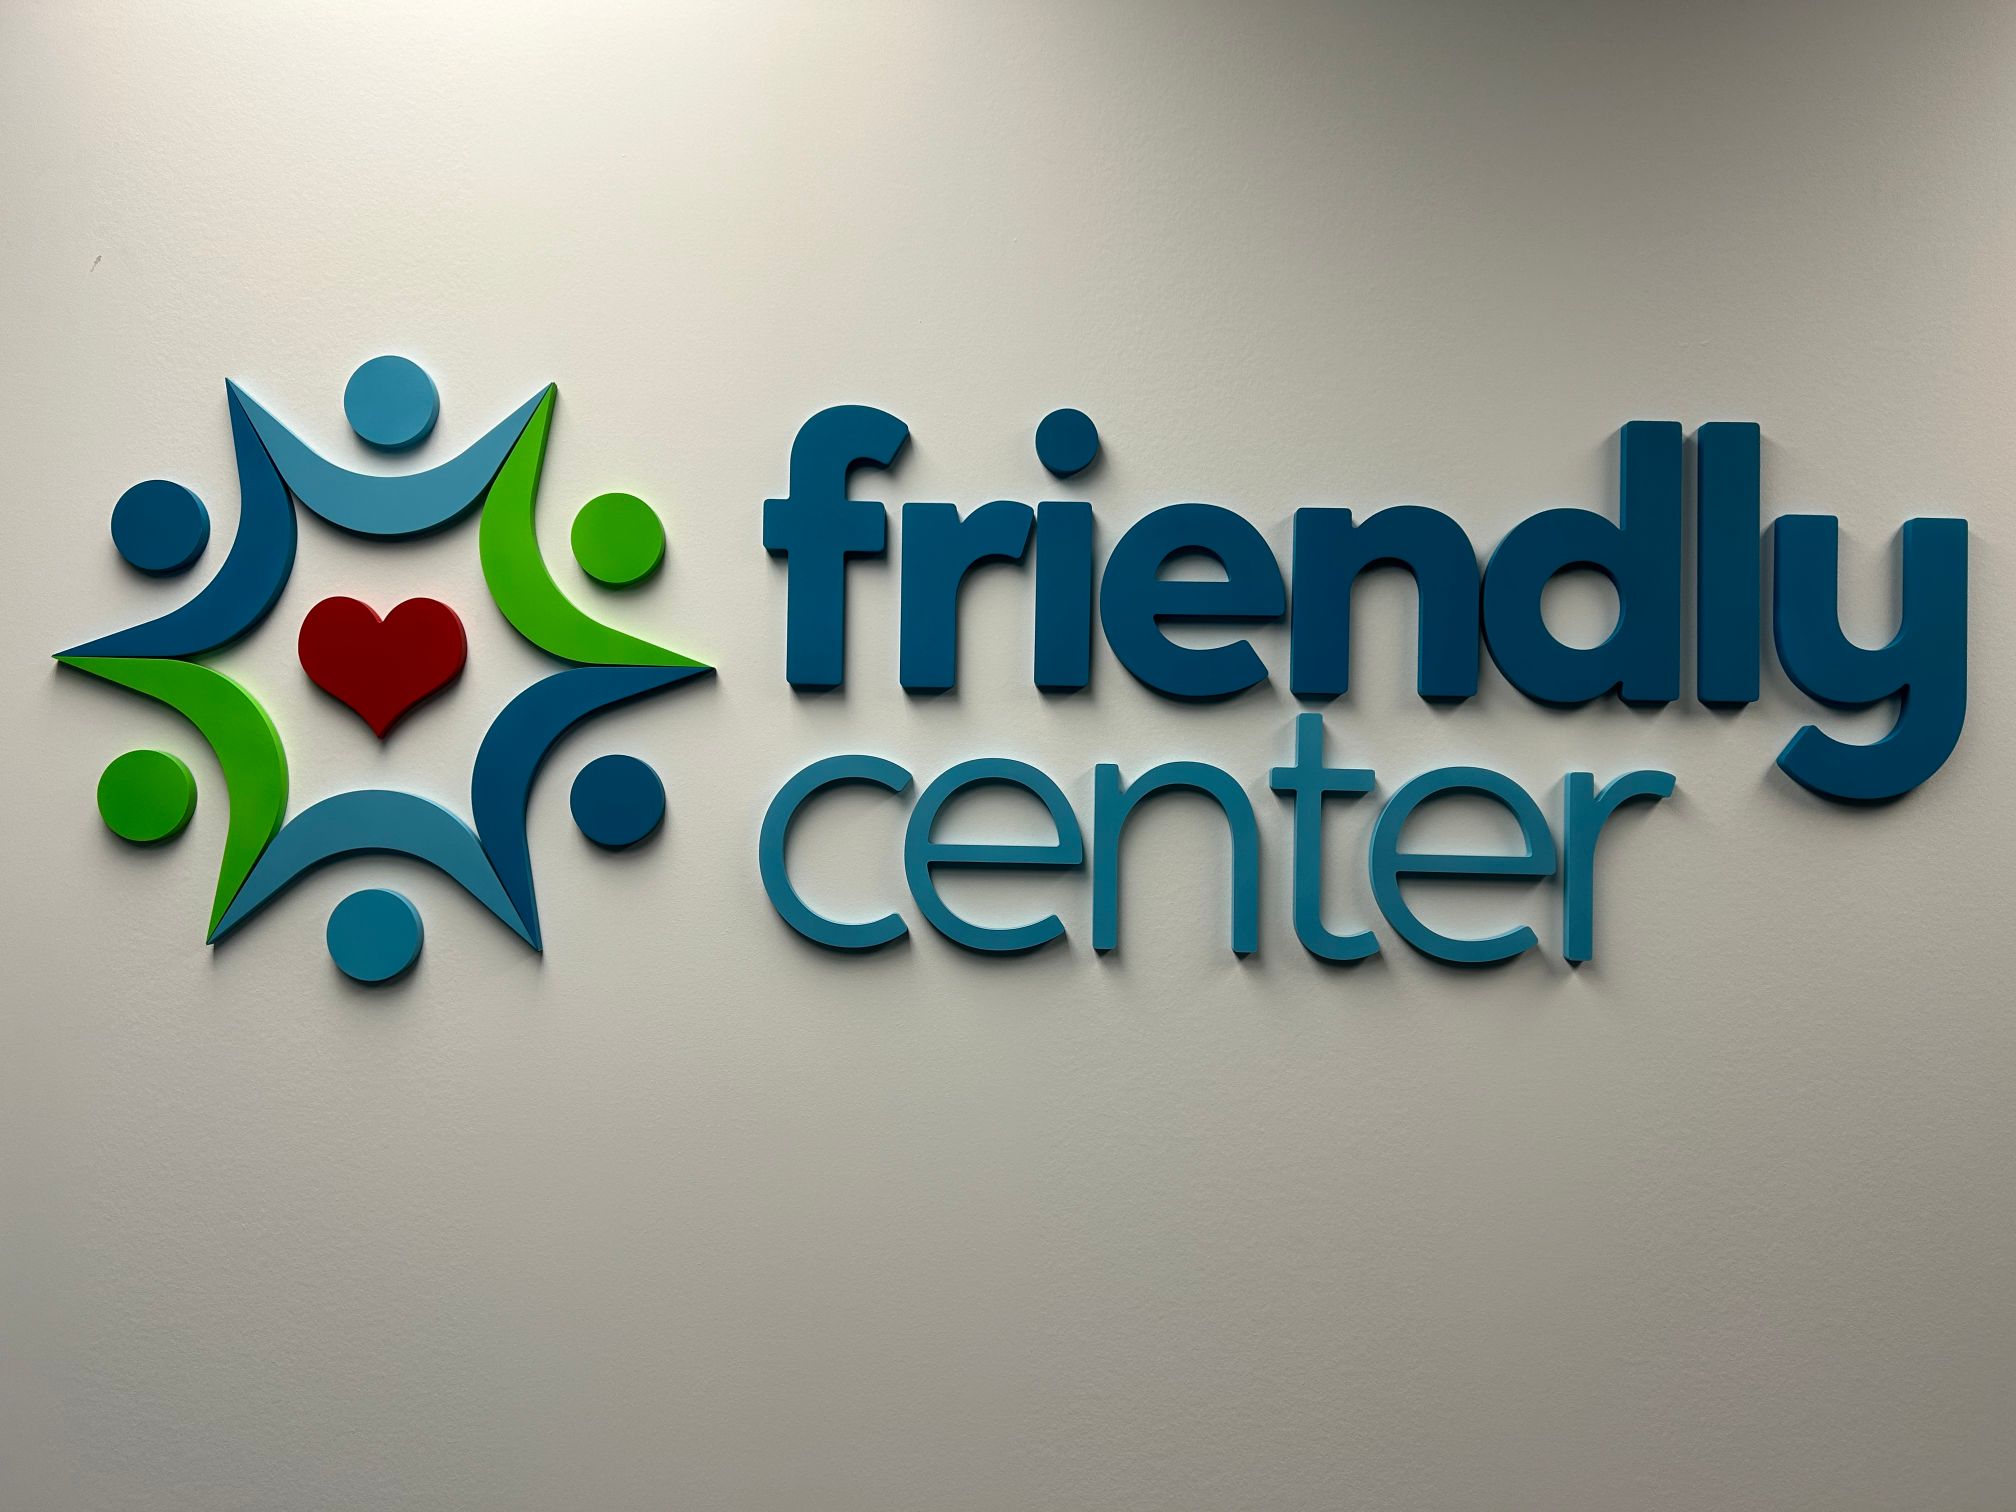 Custom Reception Logo Wall Sign for Friendly Center in Orange California